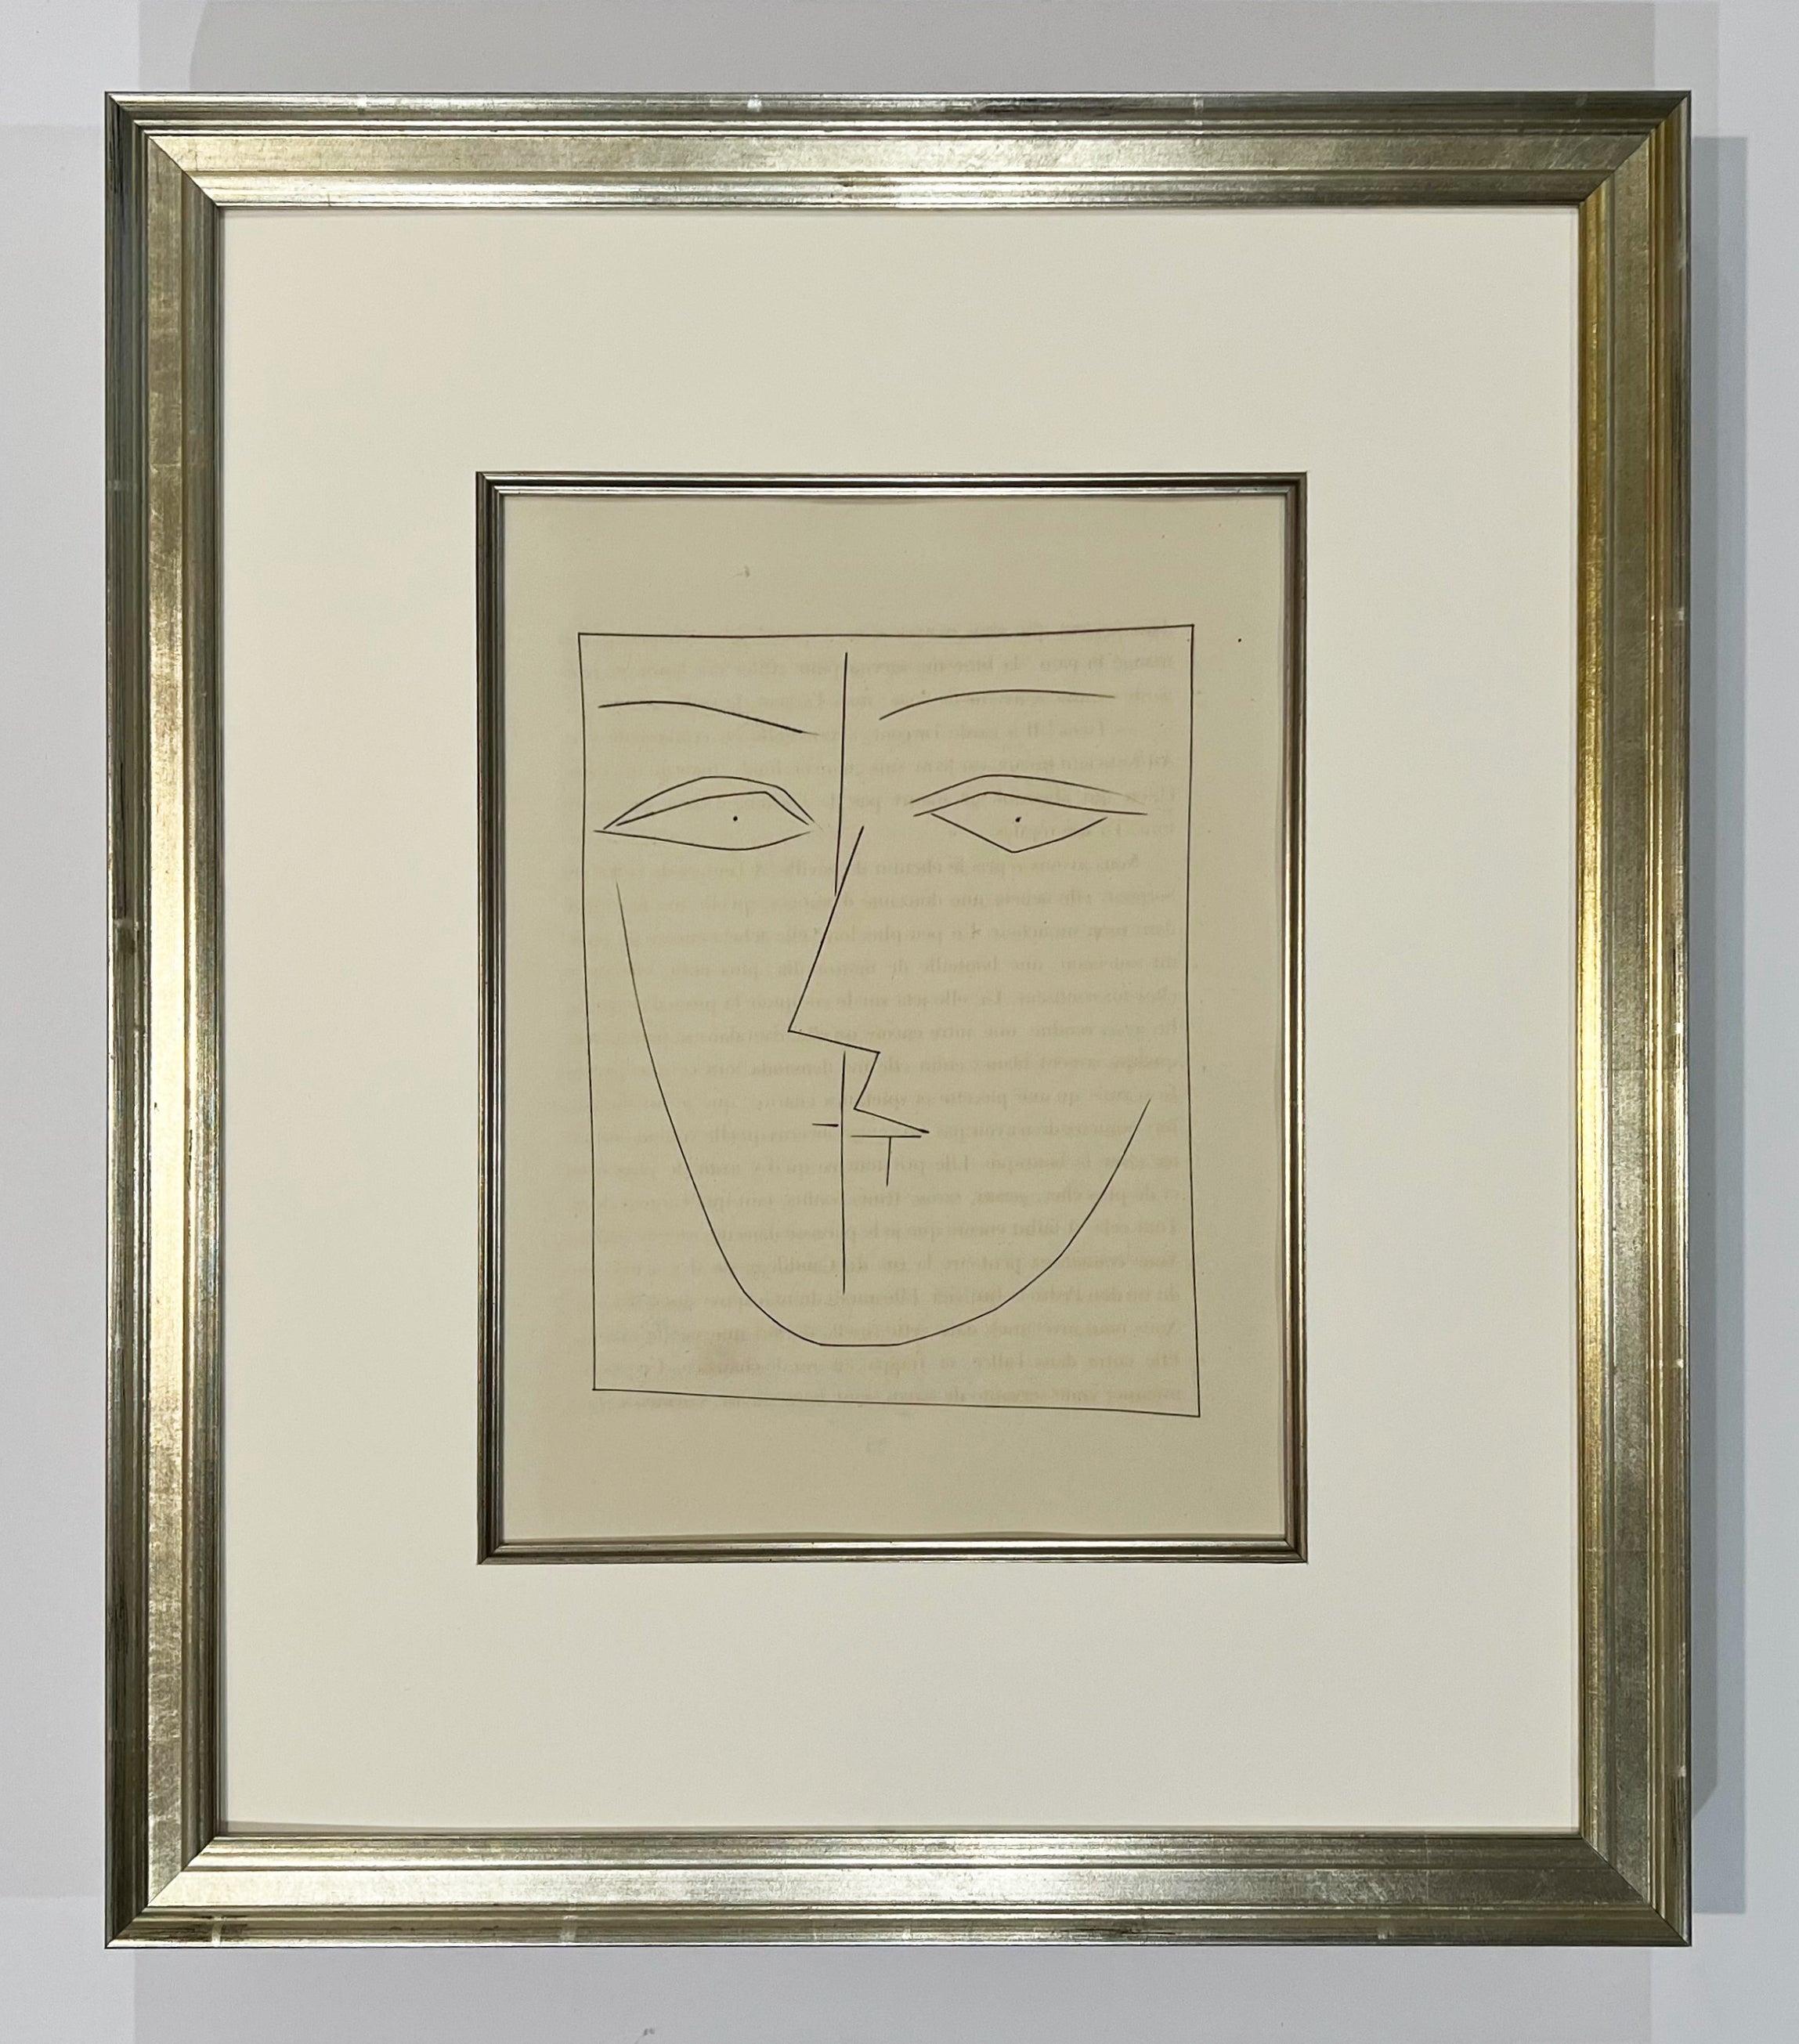 Artist: Pablo Picasso
Title: Square Head of a Woman in Semi-profile (Plate XV)
Portfolio: Carmen
Medium: Original etching on Montval wove paper
Year: 1949
Edition: 32/289
Frame Size: 21